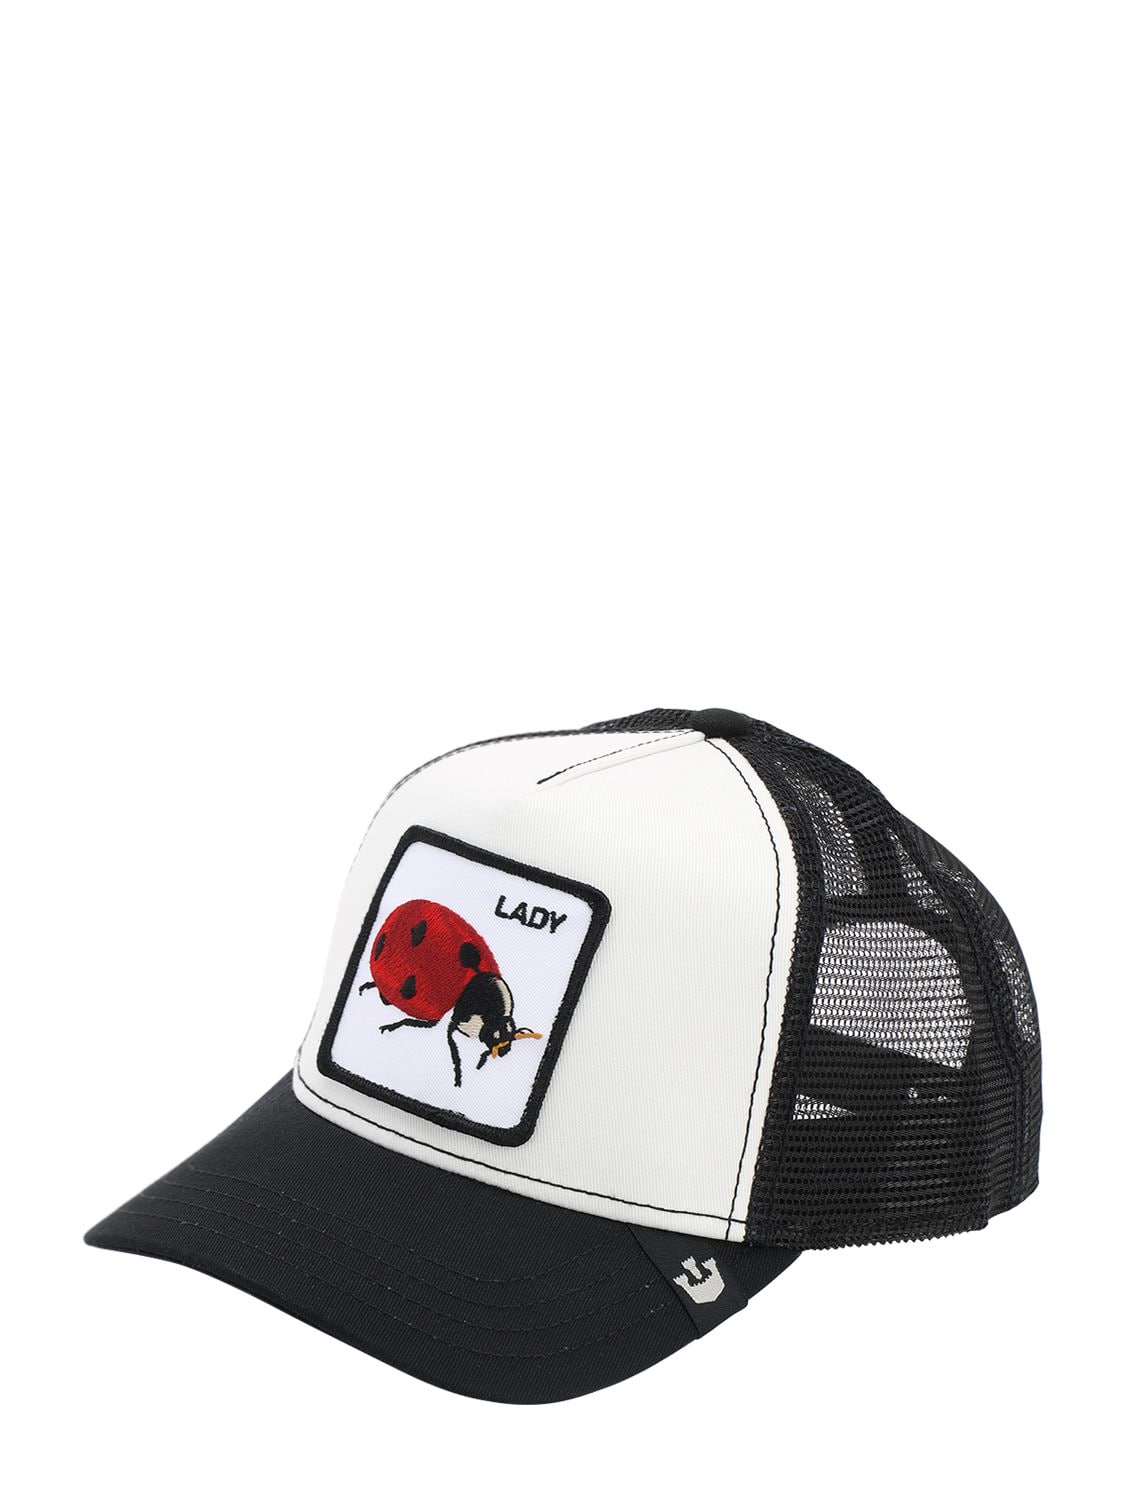 Goorin Bros Lady Bug Patch Trucker Hat In Black